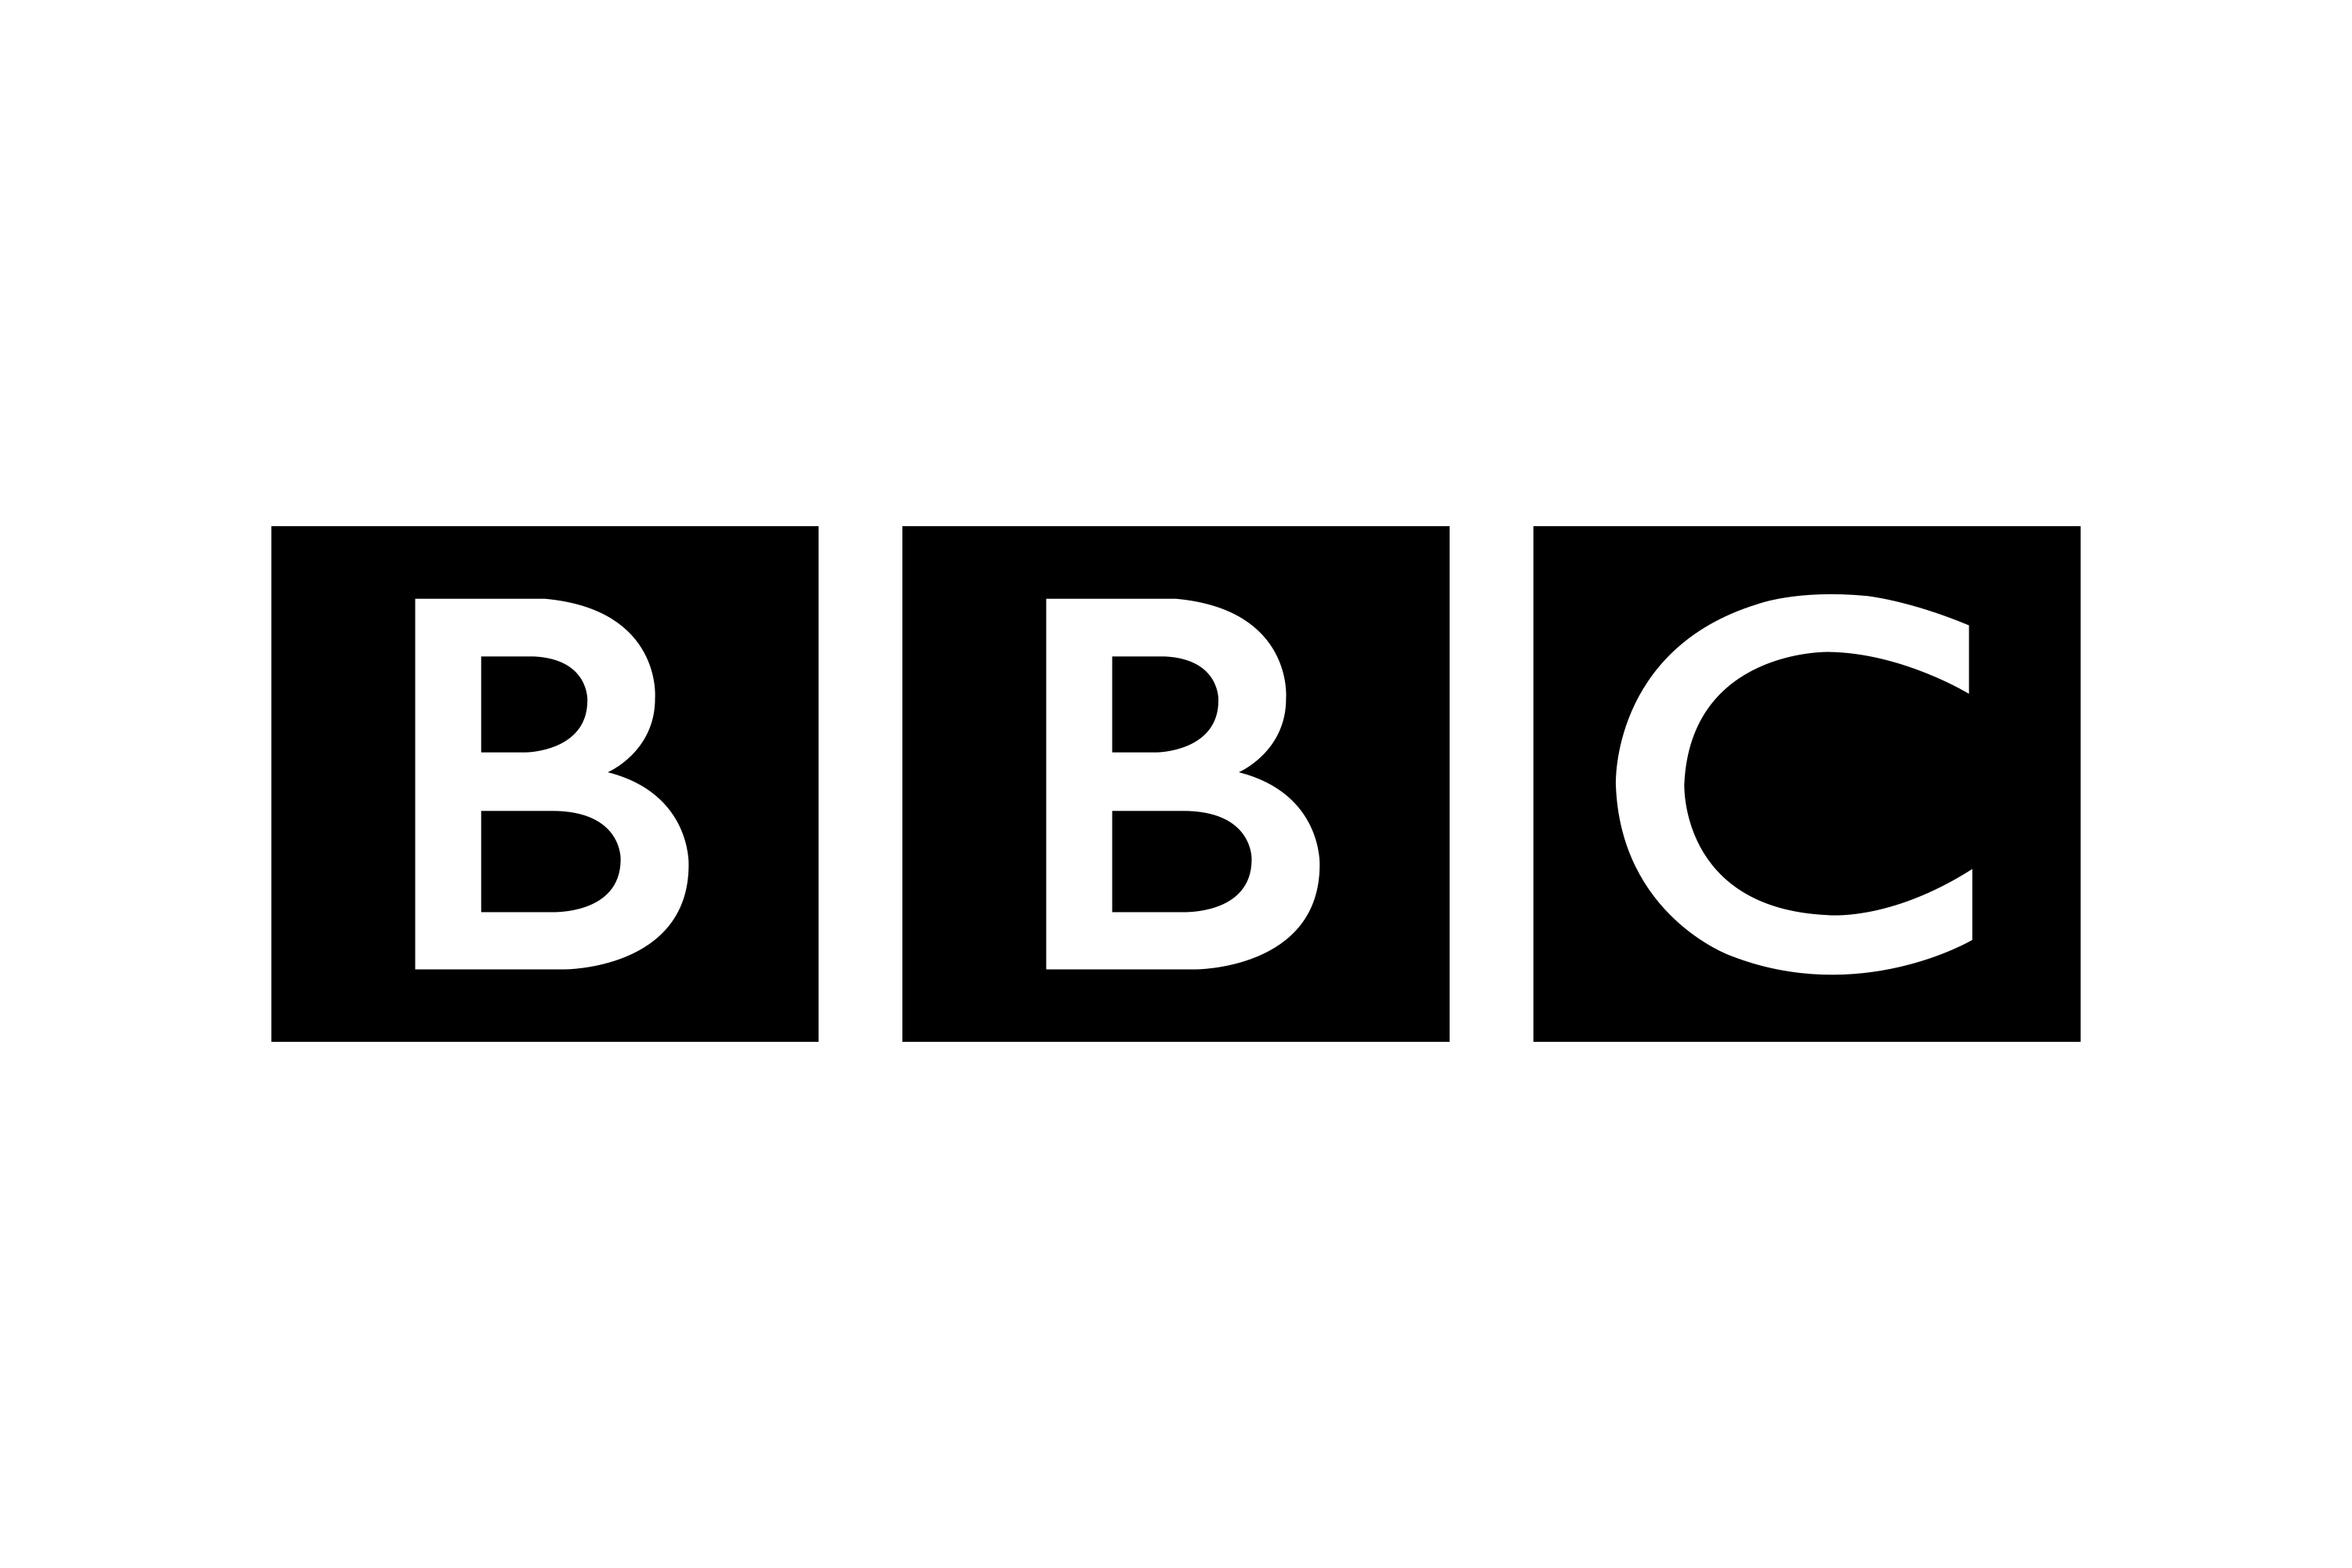 Bbc co uk. Би би си. Bbc лого. Би си си логотип. Логотип bbc Британская.